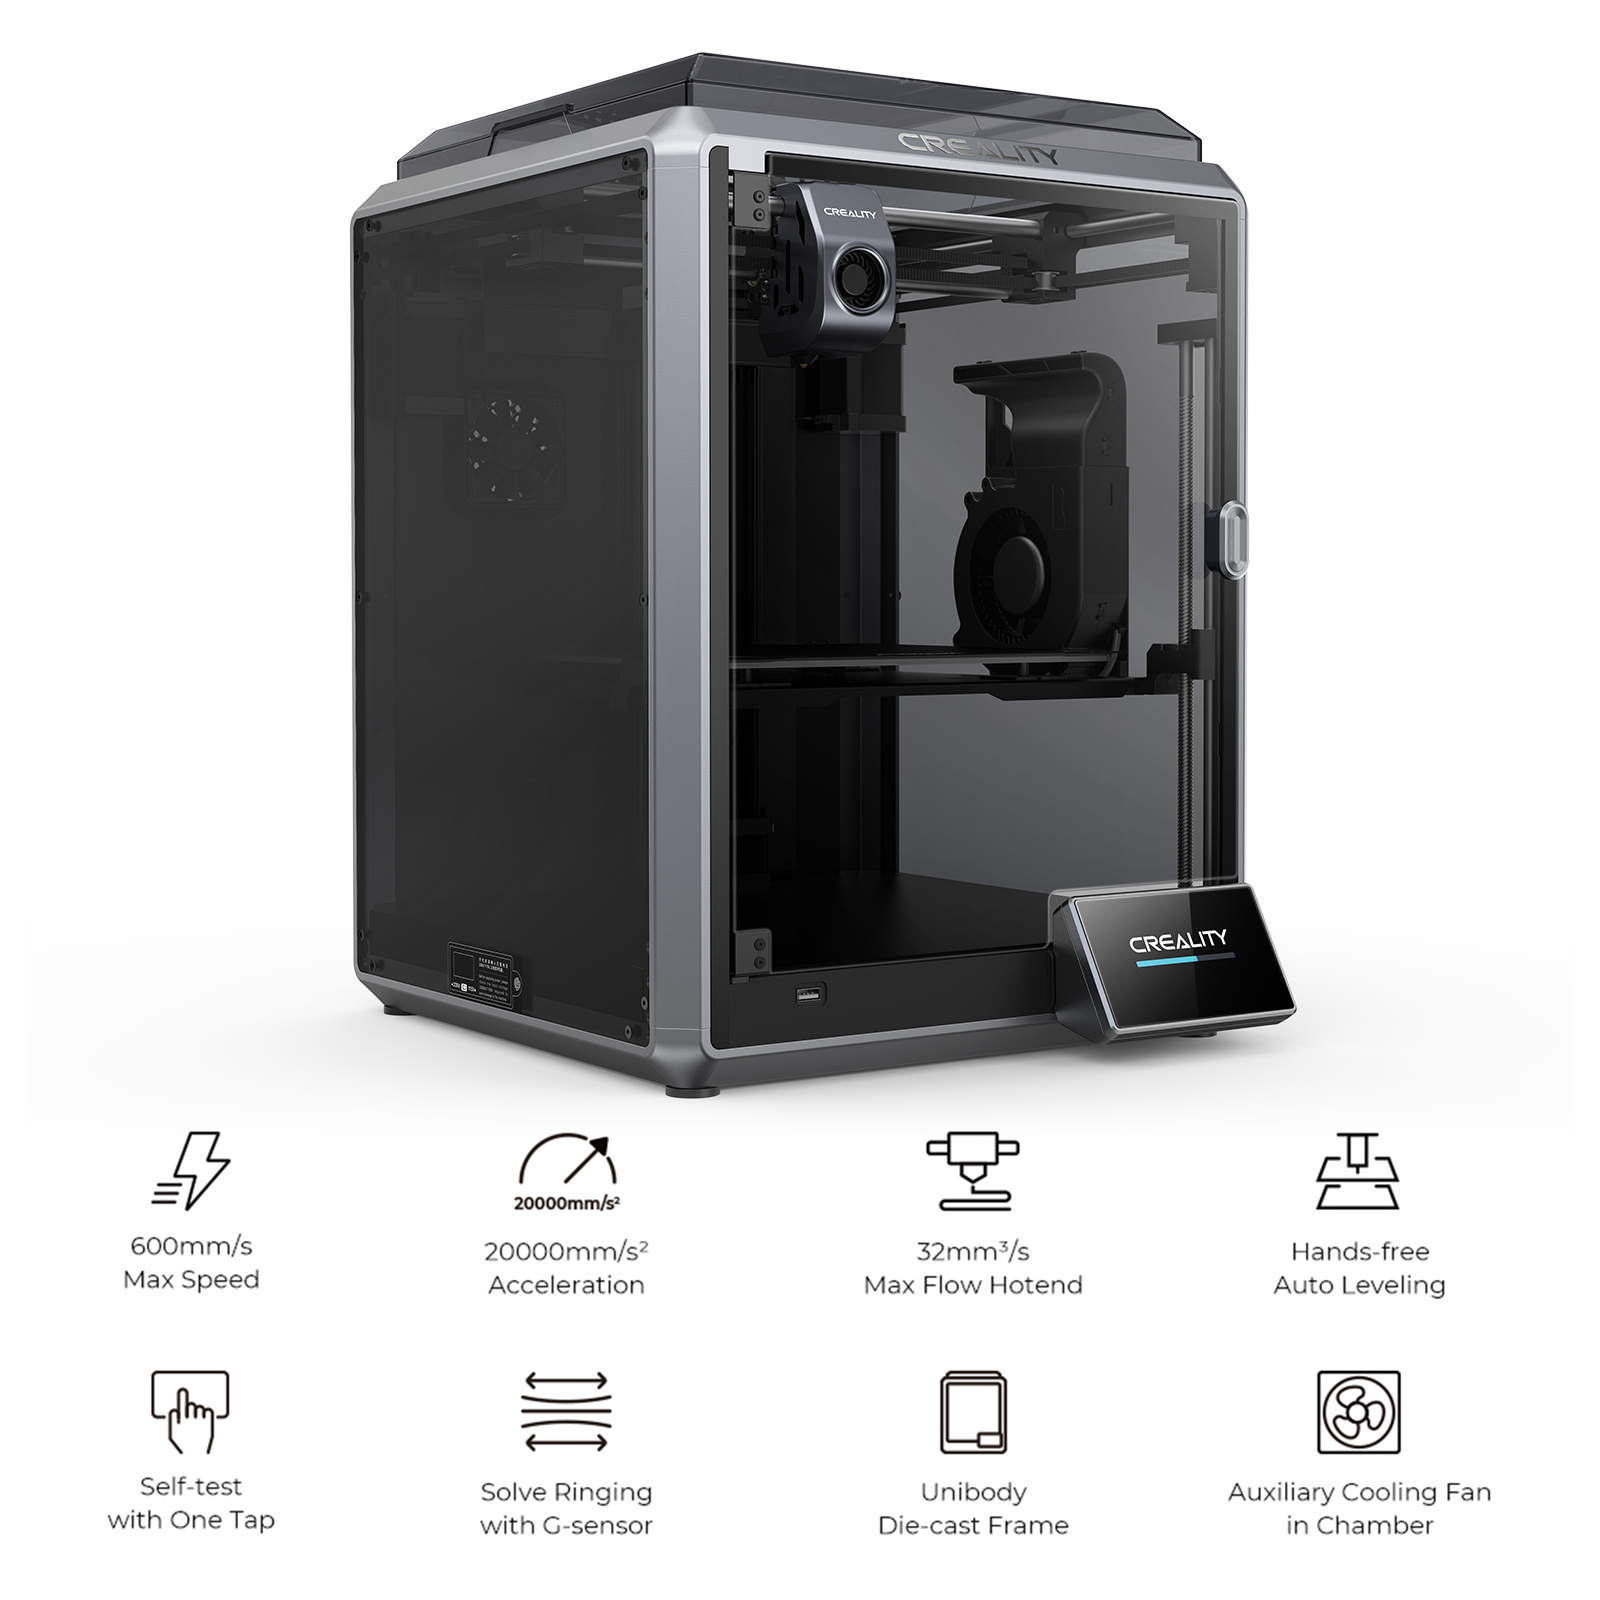 CREALITY NEW K1 High Speed 3D Printer Print Speed 600mm/s Print Volume 220*220*250mm